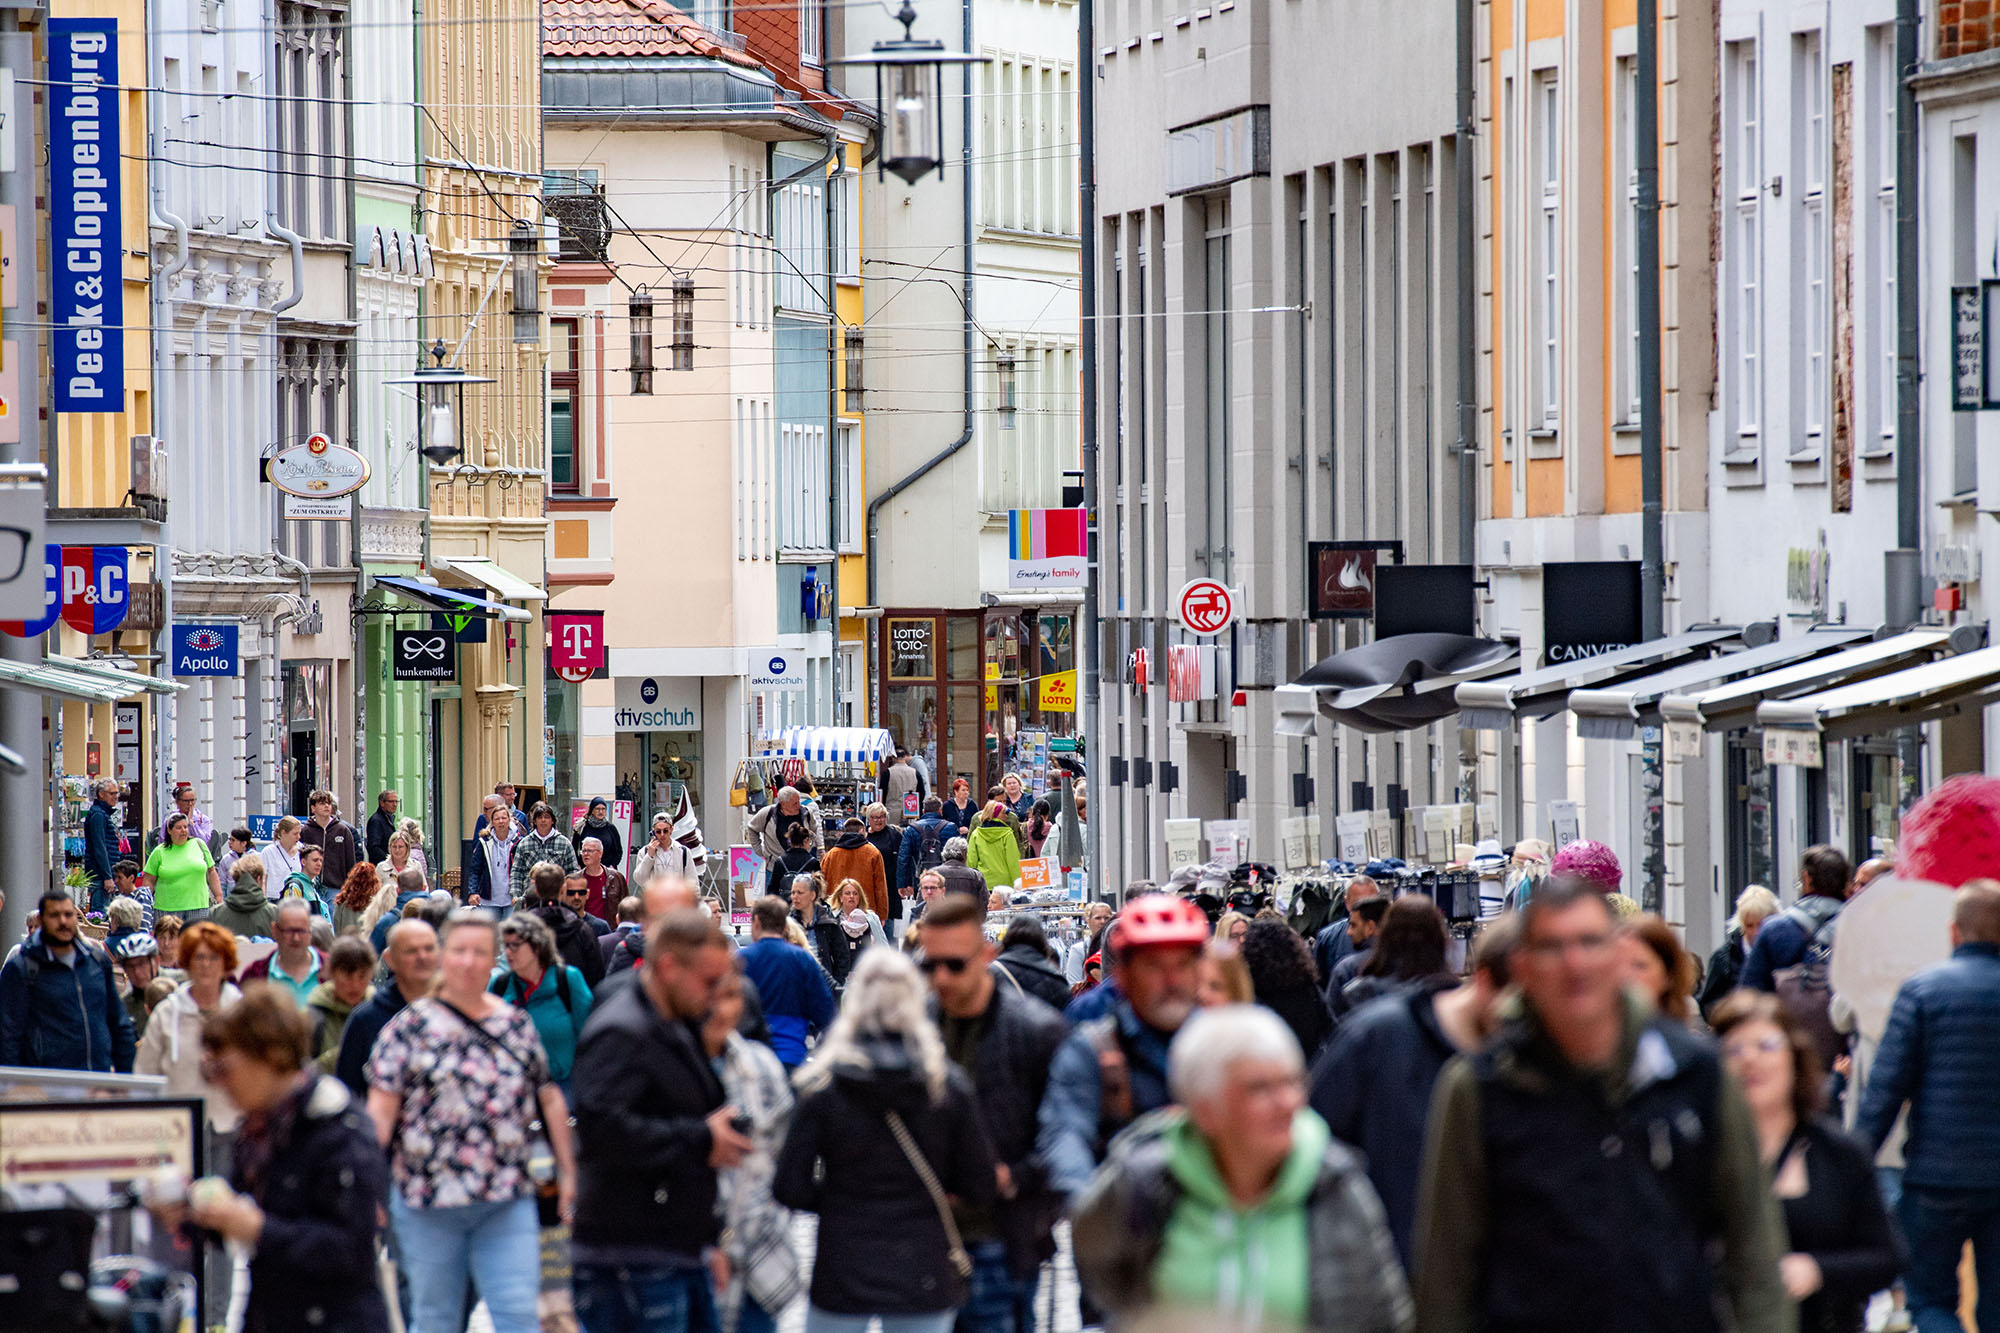 People shop on Ossenreyer Street in Stralsund, Mecklenburg-Western Pomerania, Germany, on May 20.